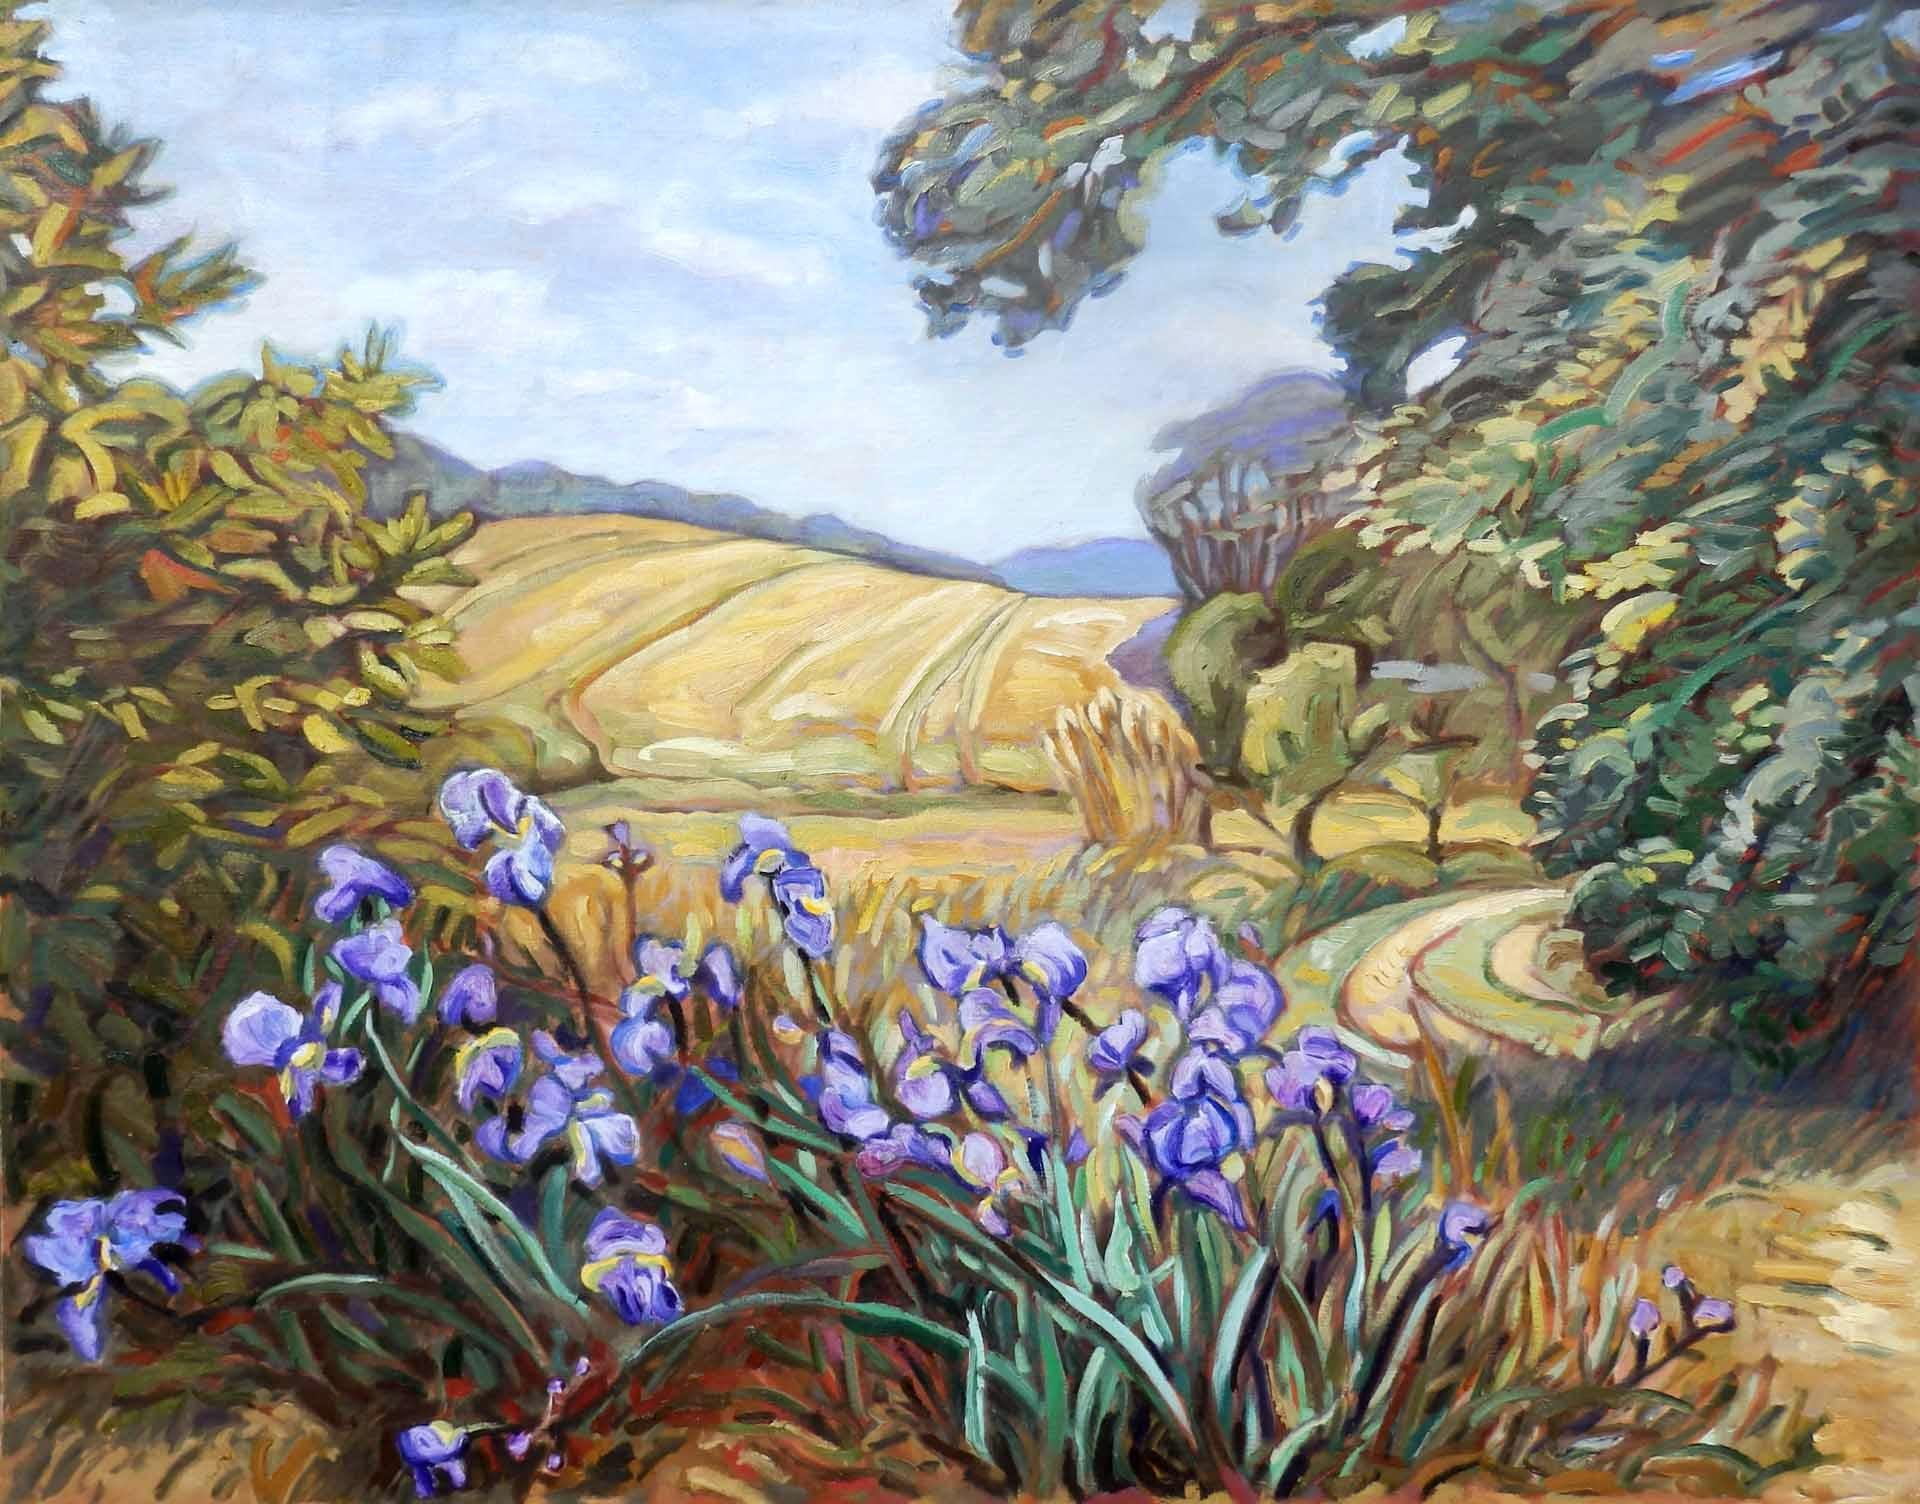 Yves Calméjane Figurative Painting - "Orchestra of Irises", Vibrant Post-Impressionist Purple Floral Oil Painting